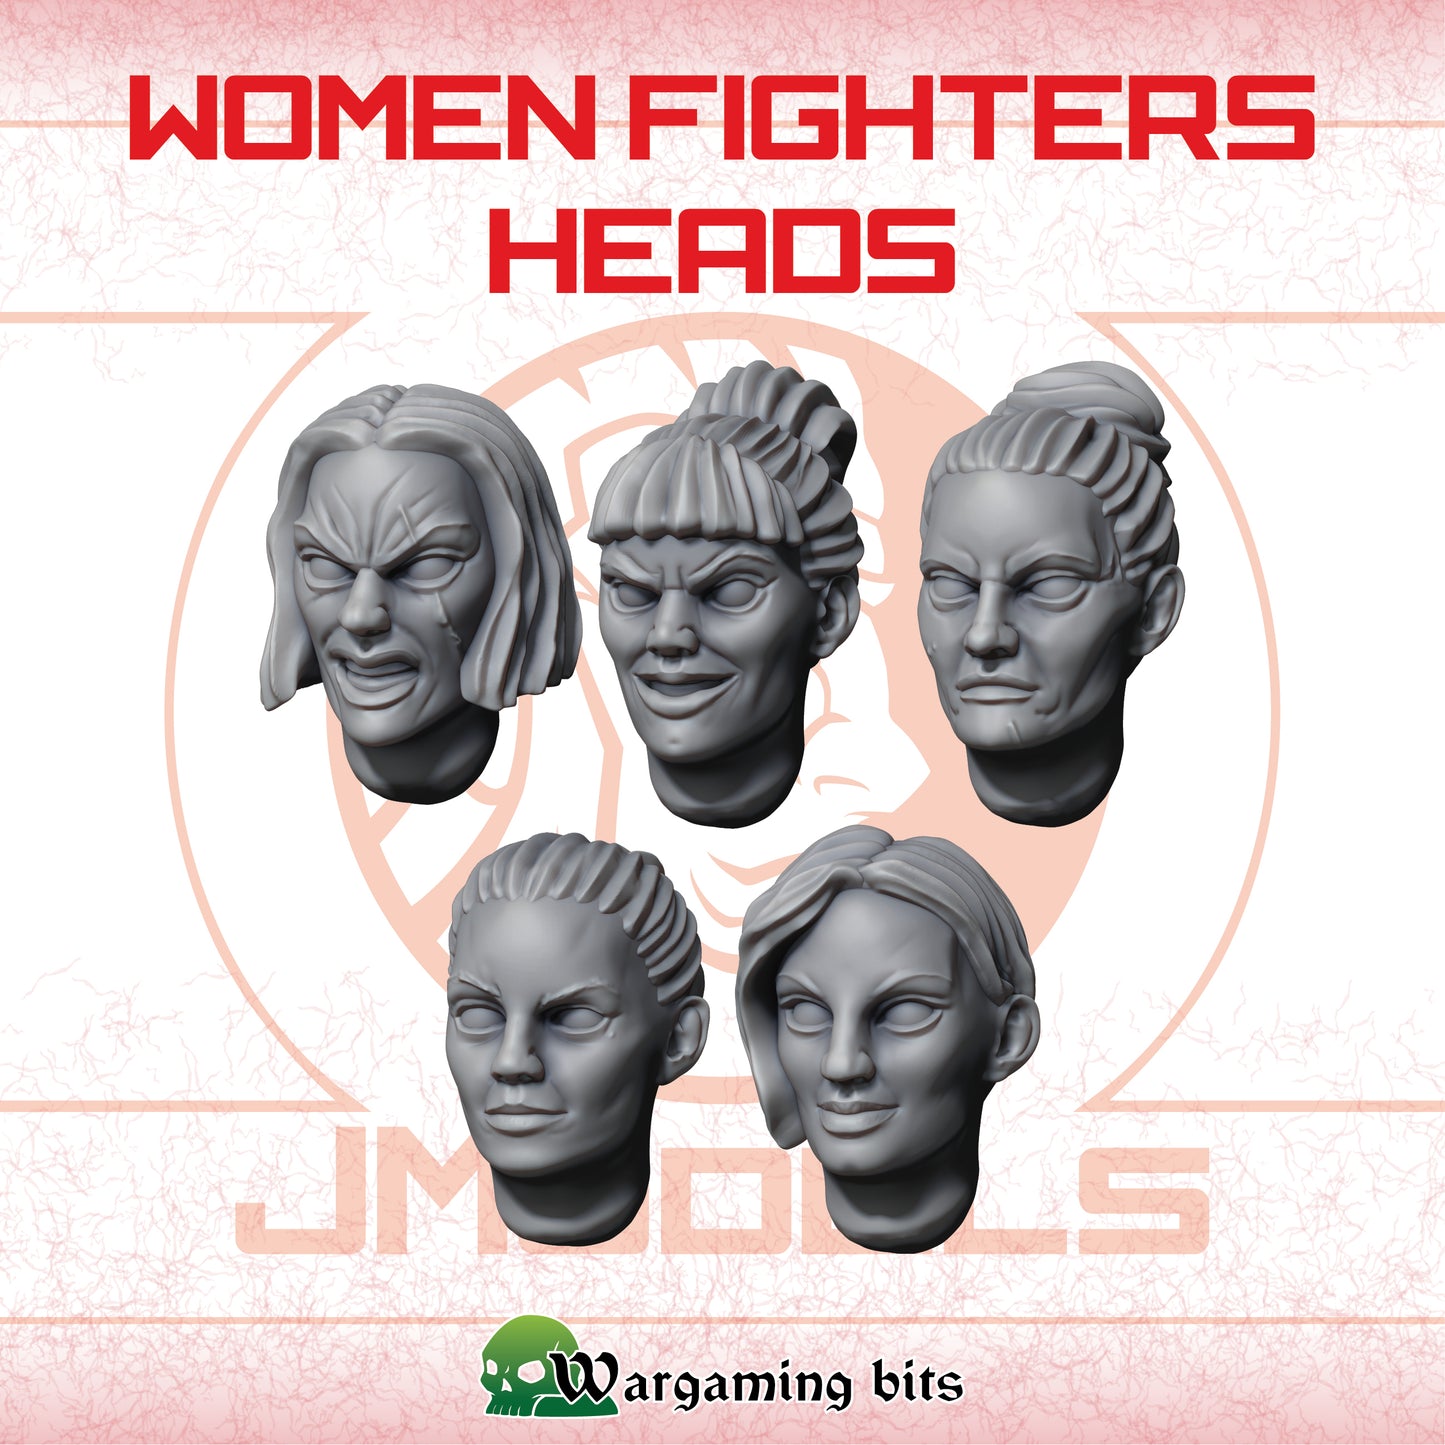 Women fighter heads